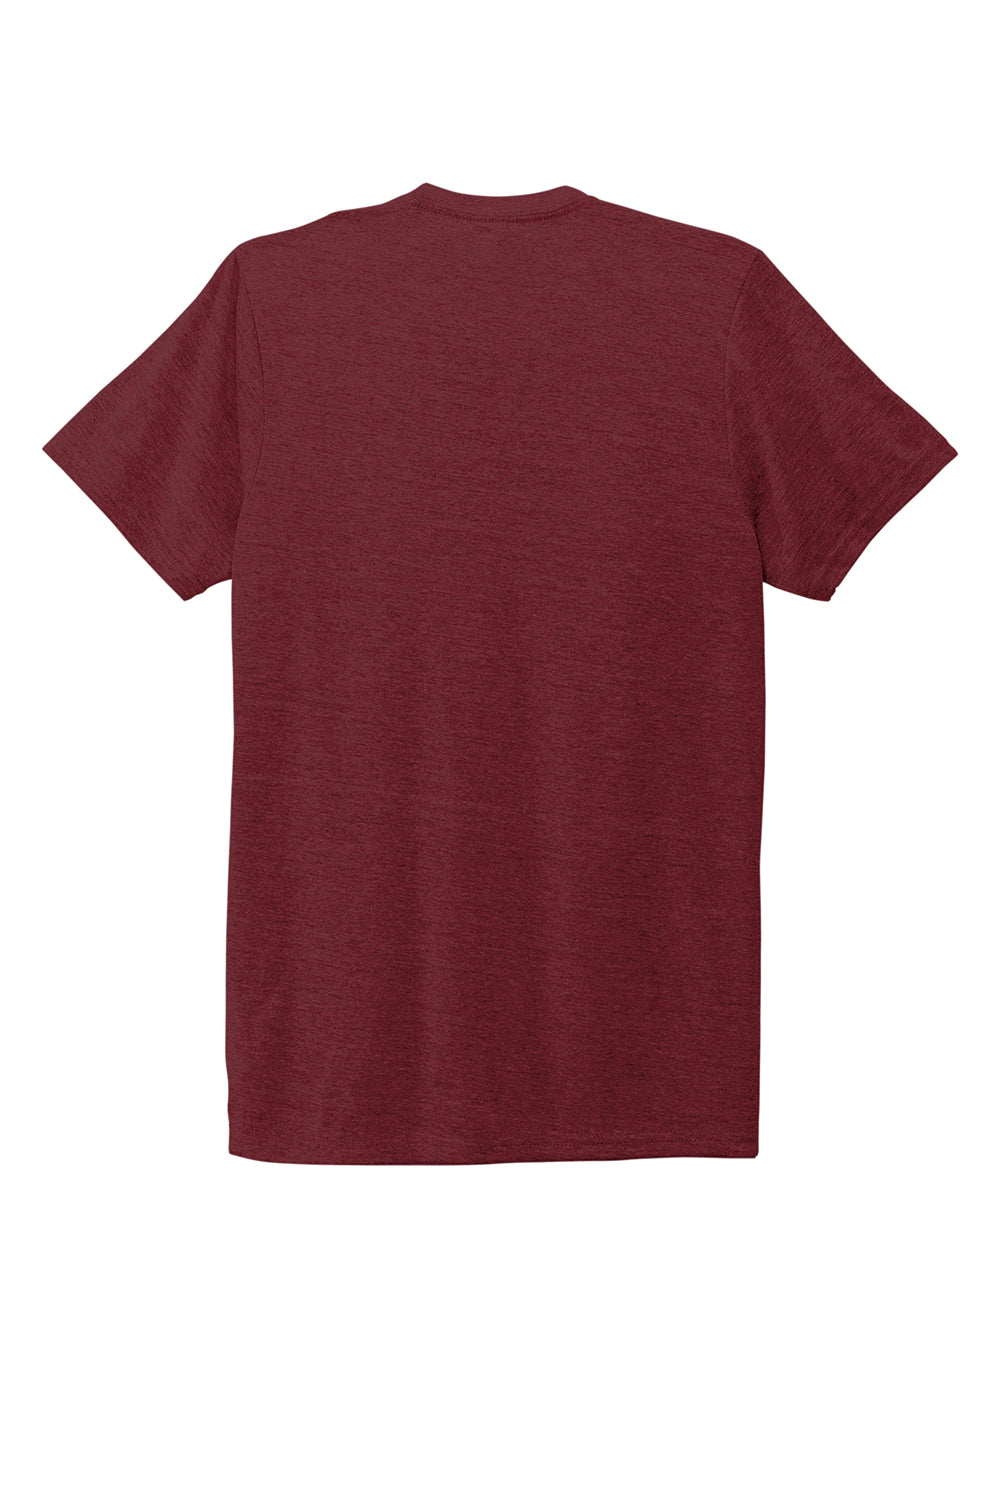 Allmade AL2004 Mens Short Sleeve Crewneck T-Shirt Vino Red Flat Back